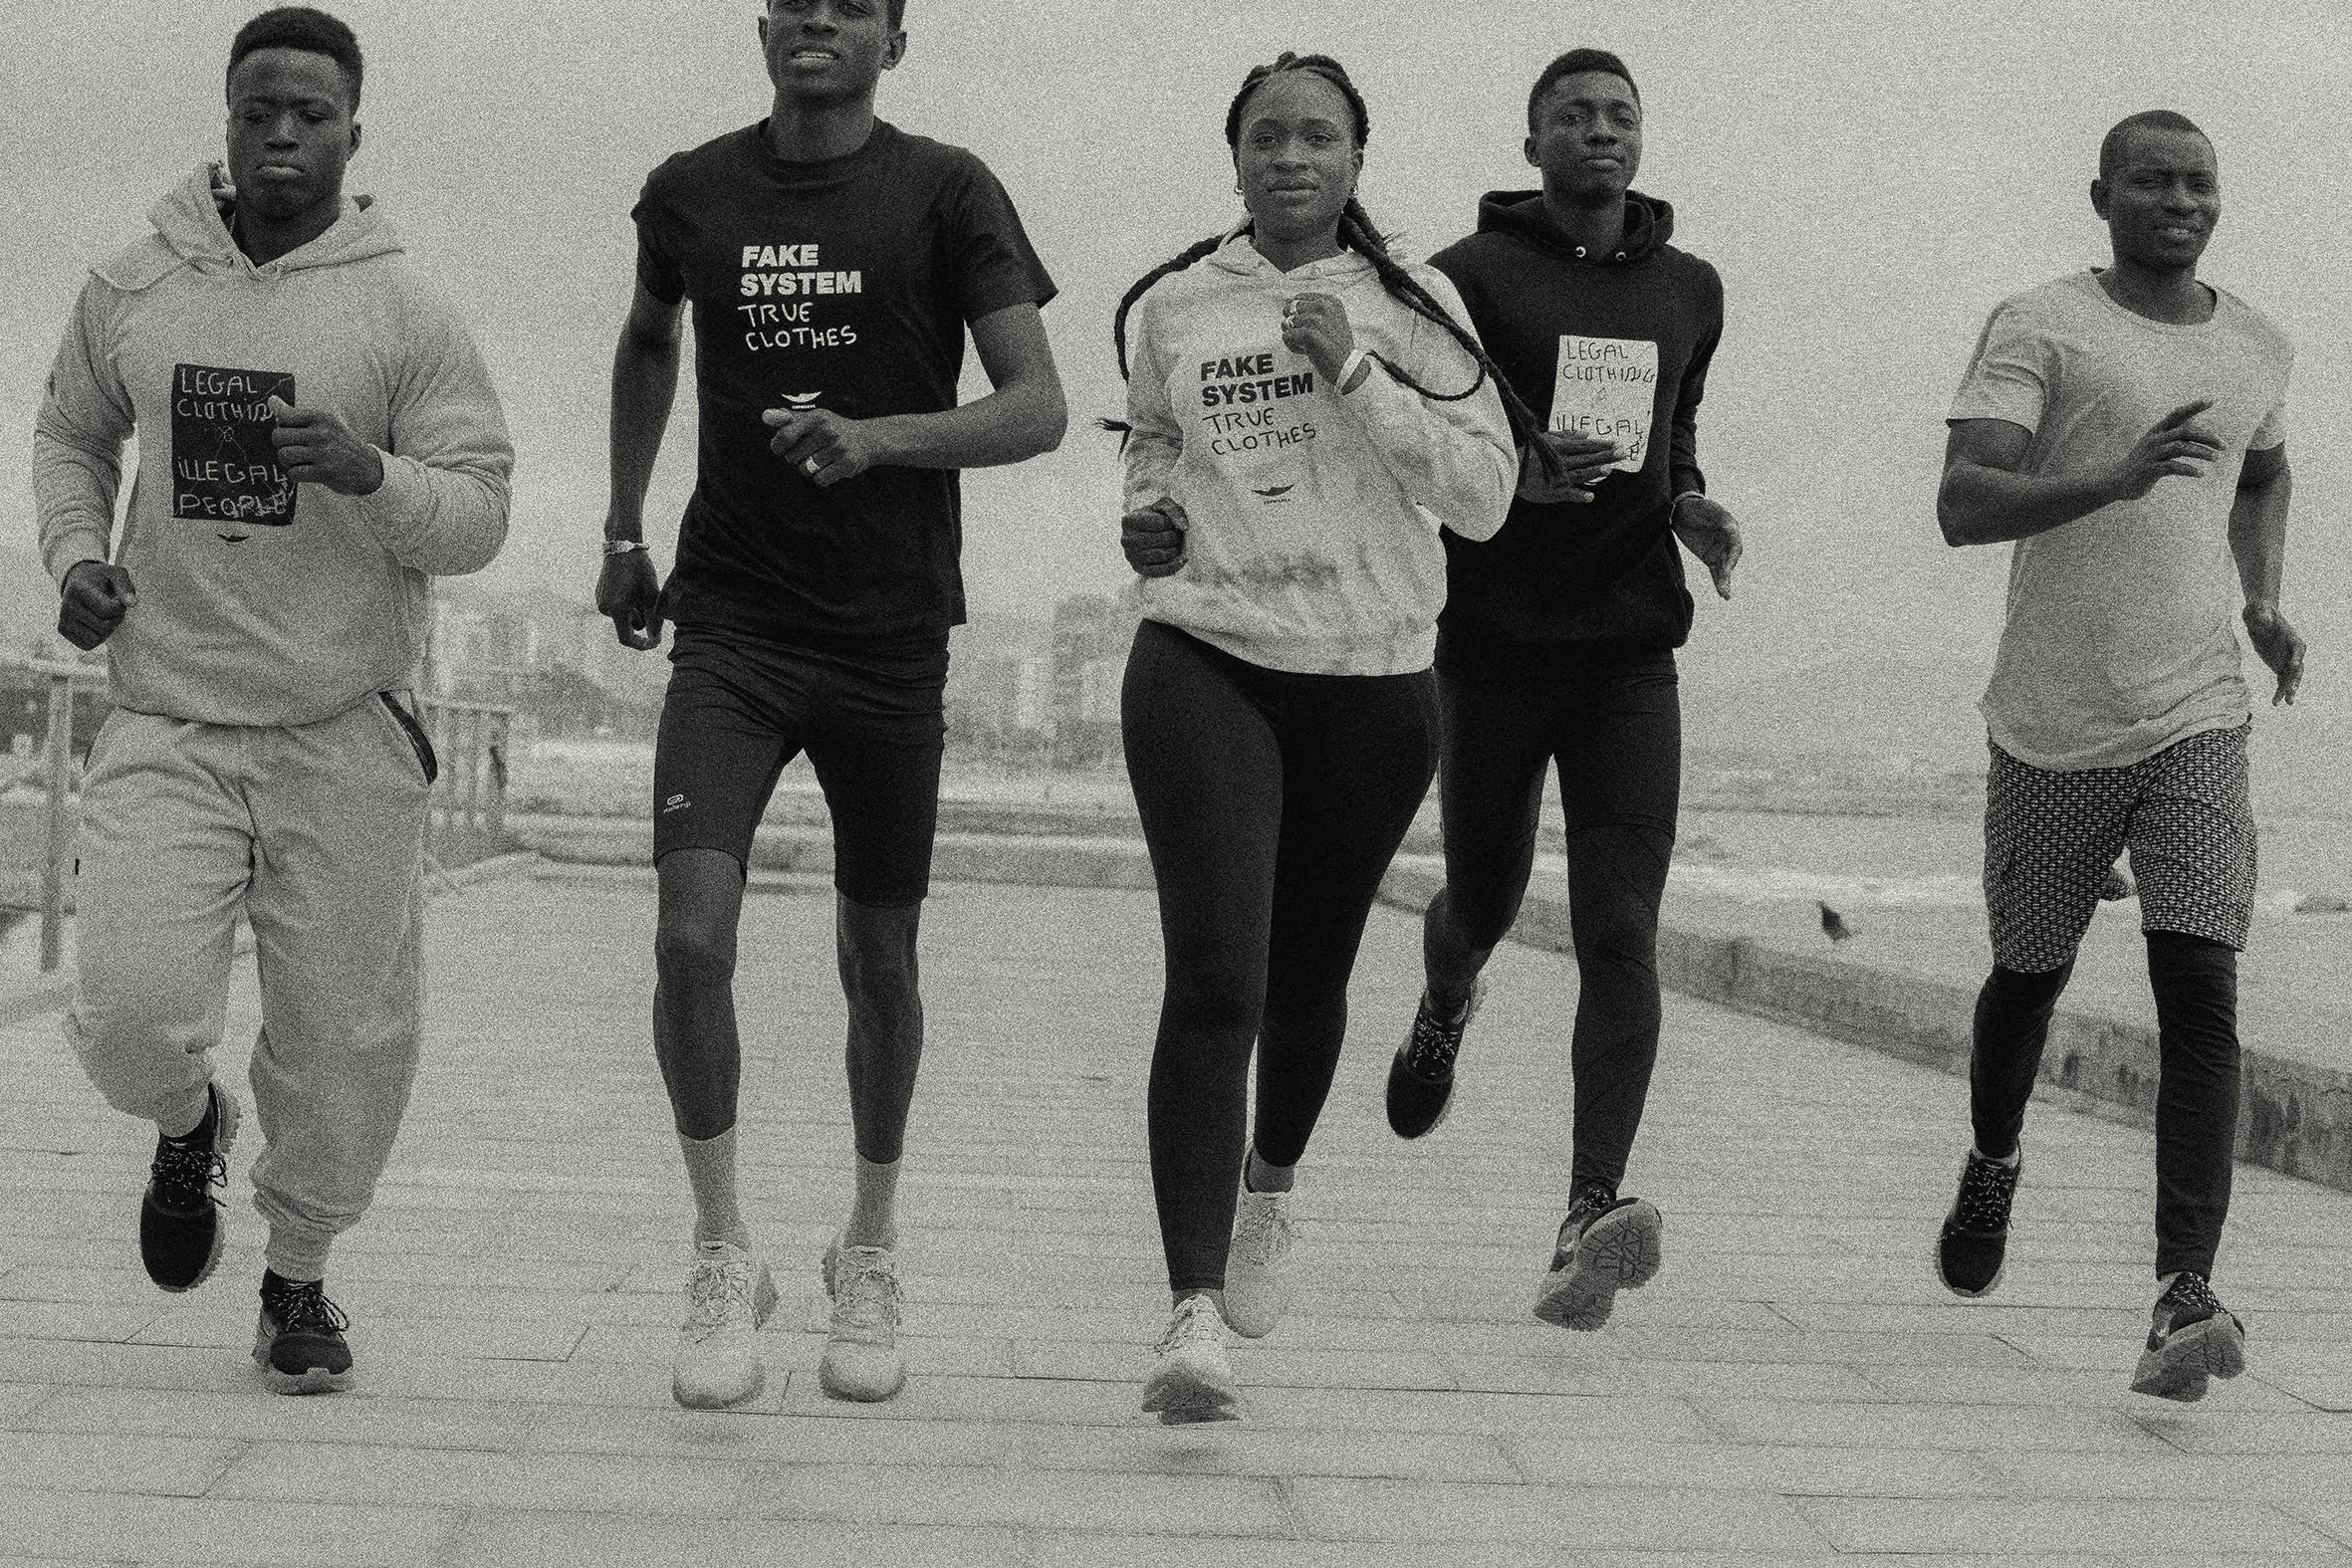 Five Black athletes wearing Top Mantas gear run alongside each other